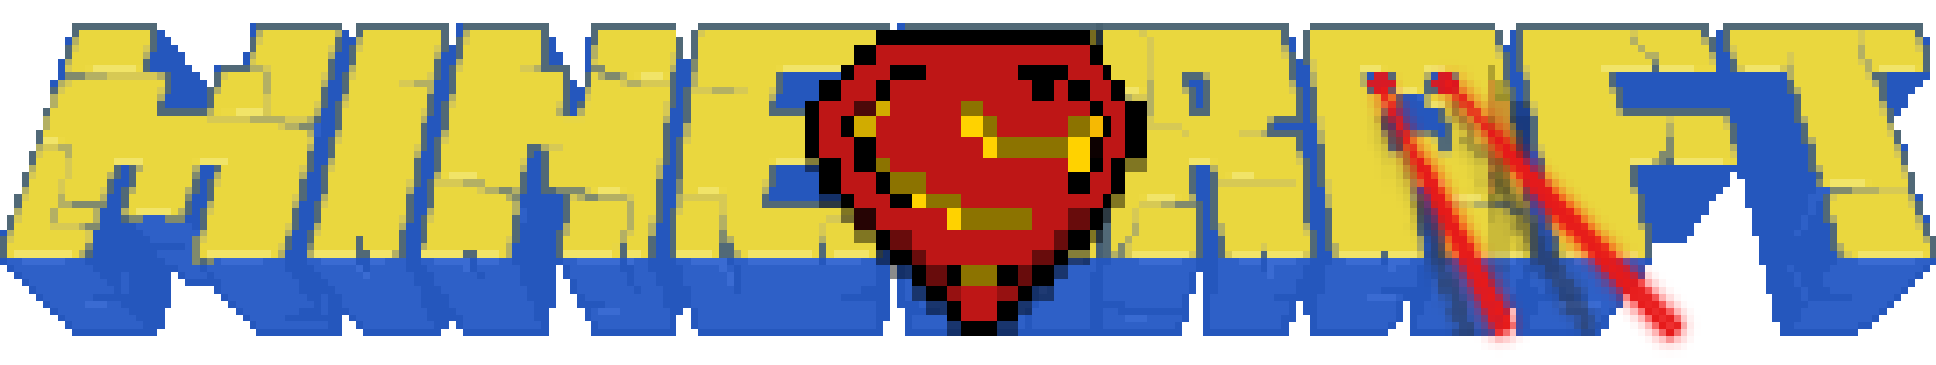 znygames themed gui texturepack superman java - title